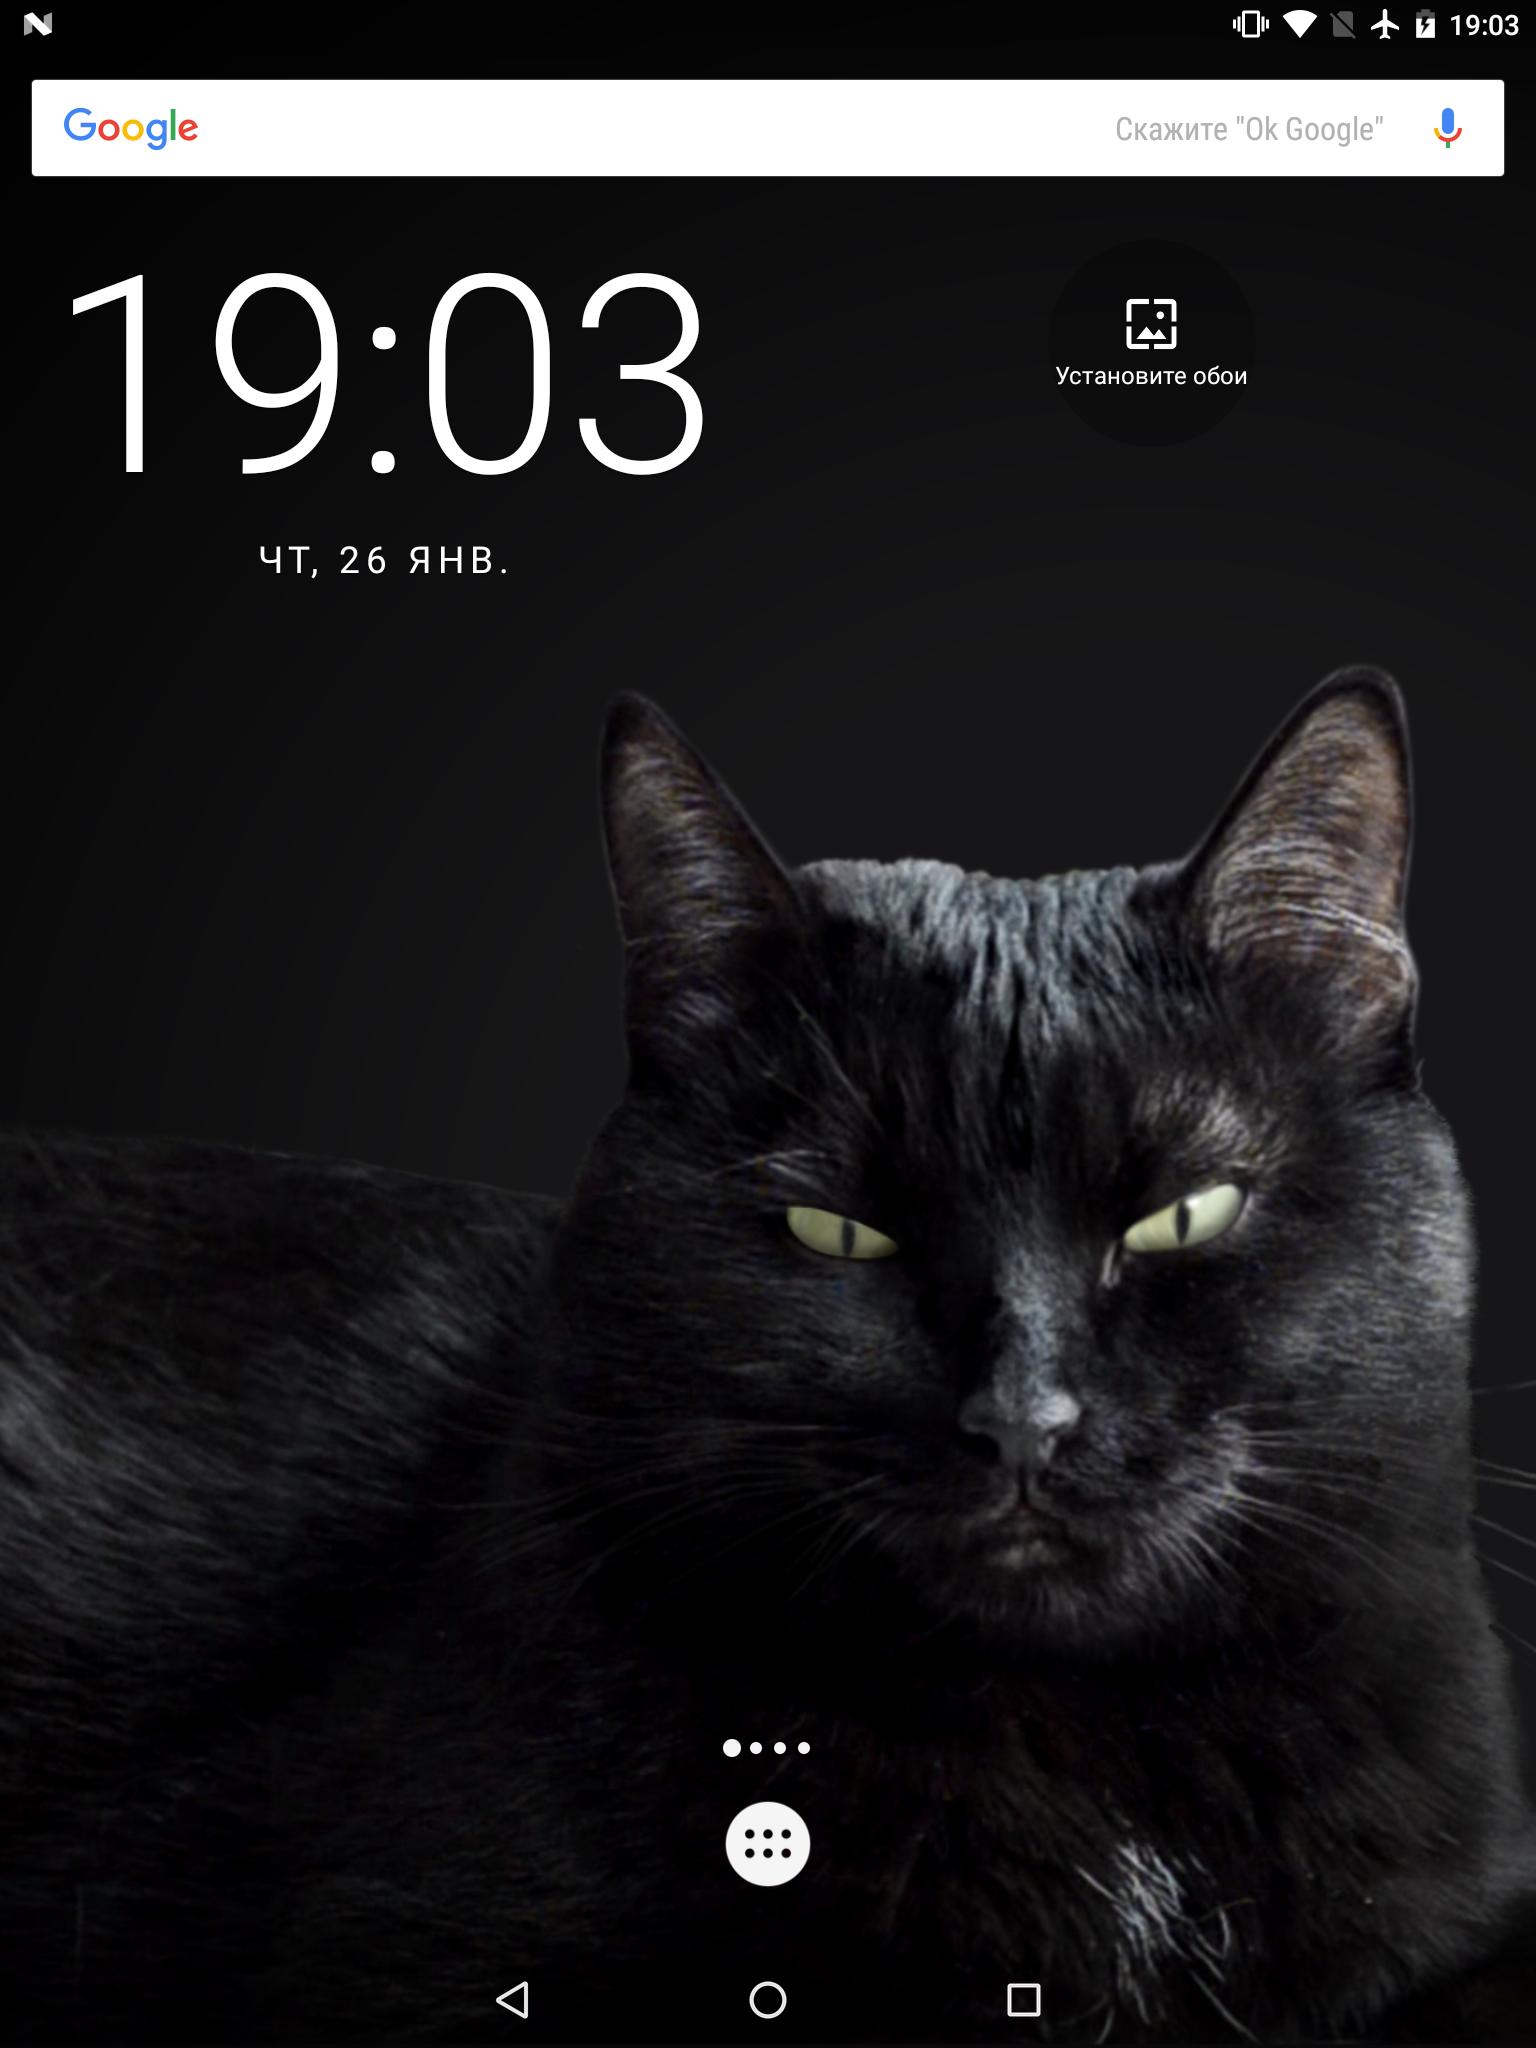 Kucing Hitam Lucu Wallpaper Hidup For Android APK Download